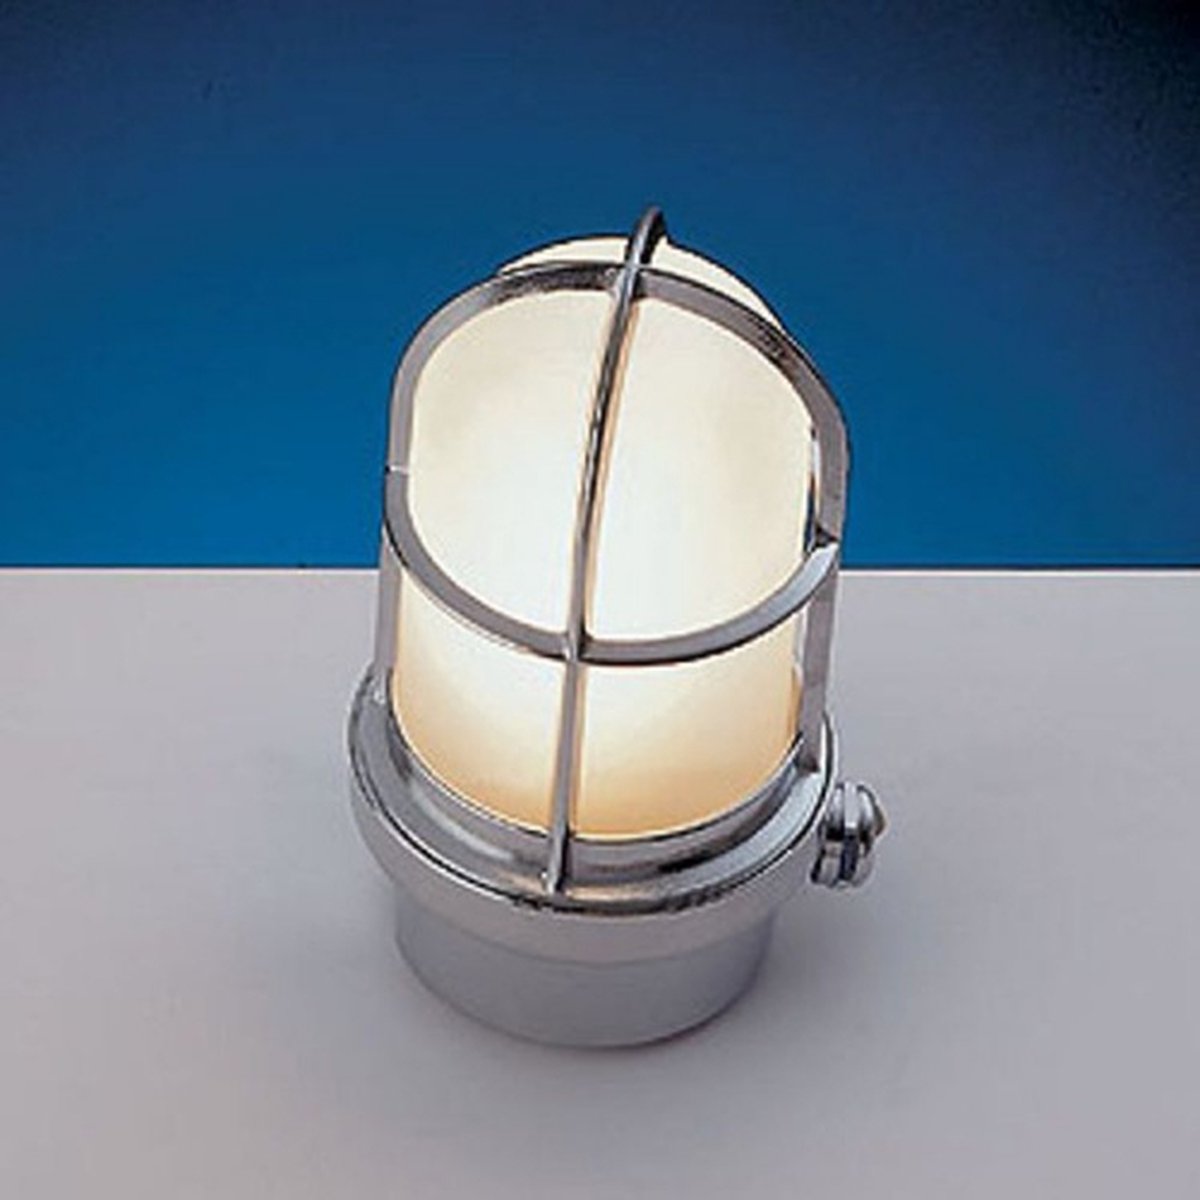 Outlight - Buitenlamp - Scheepslamp Spanker - Chroom, mat glas - Outlet